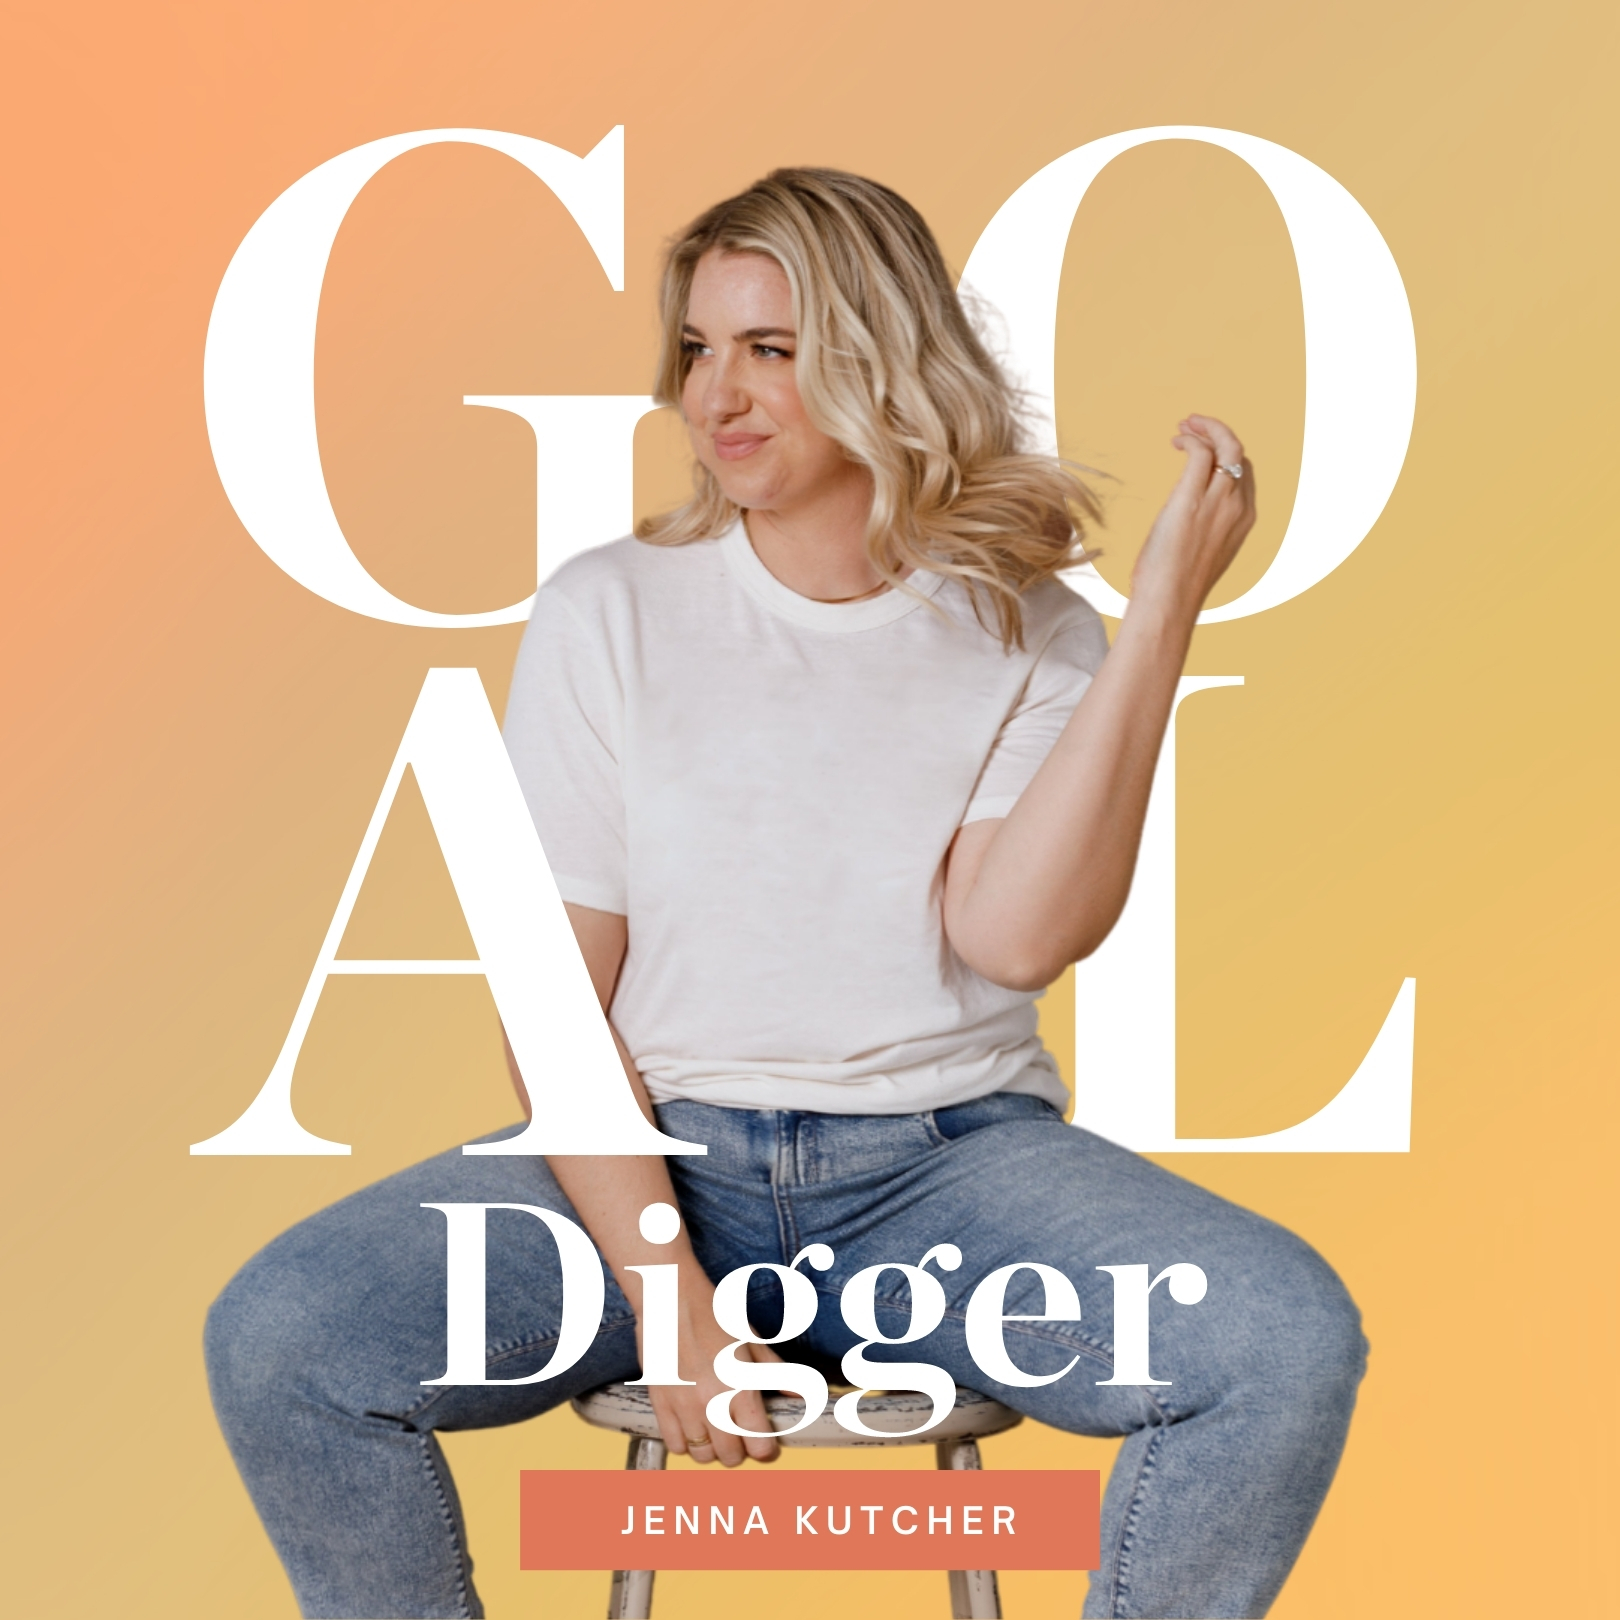 The Goal Digger Podcast by Jenna Kutcher